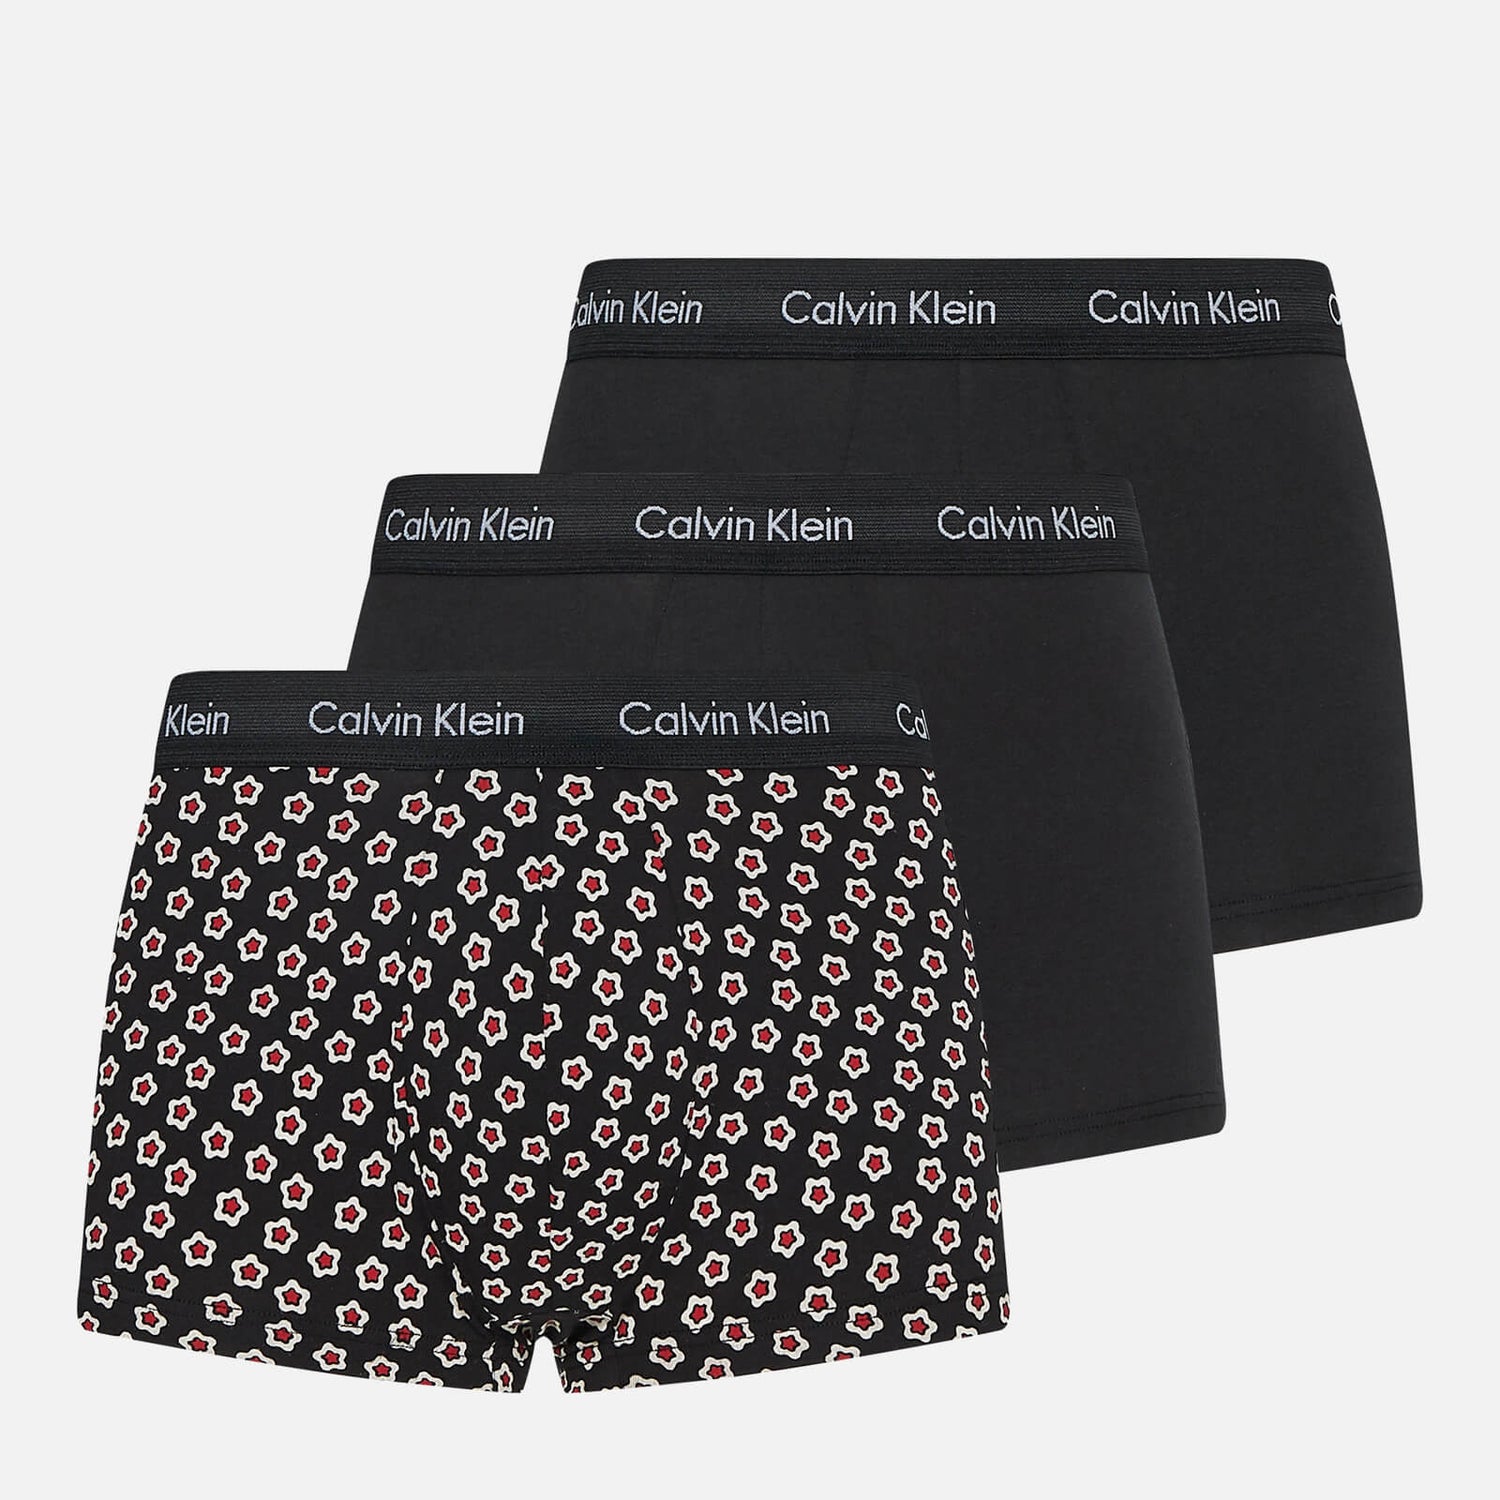 Calvin Klein Men's 3 Pack Low Rise Trunk Boxers - Black/Black/Dreamy Star Print